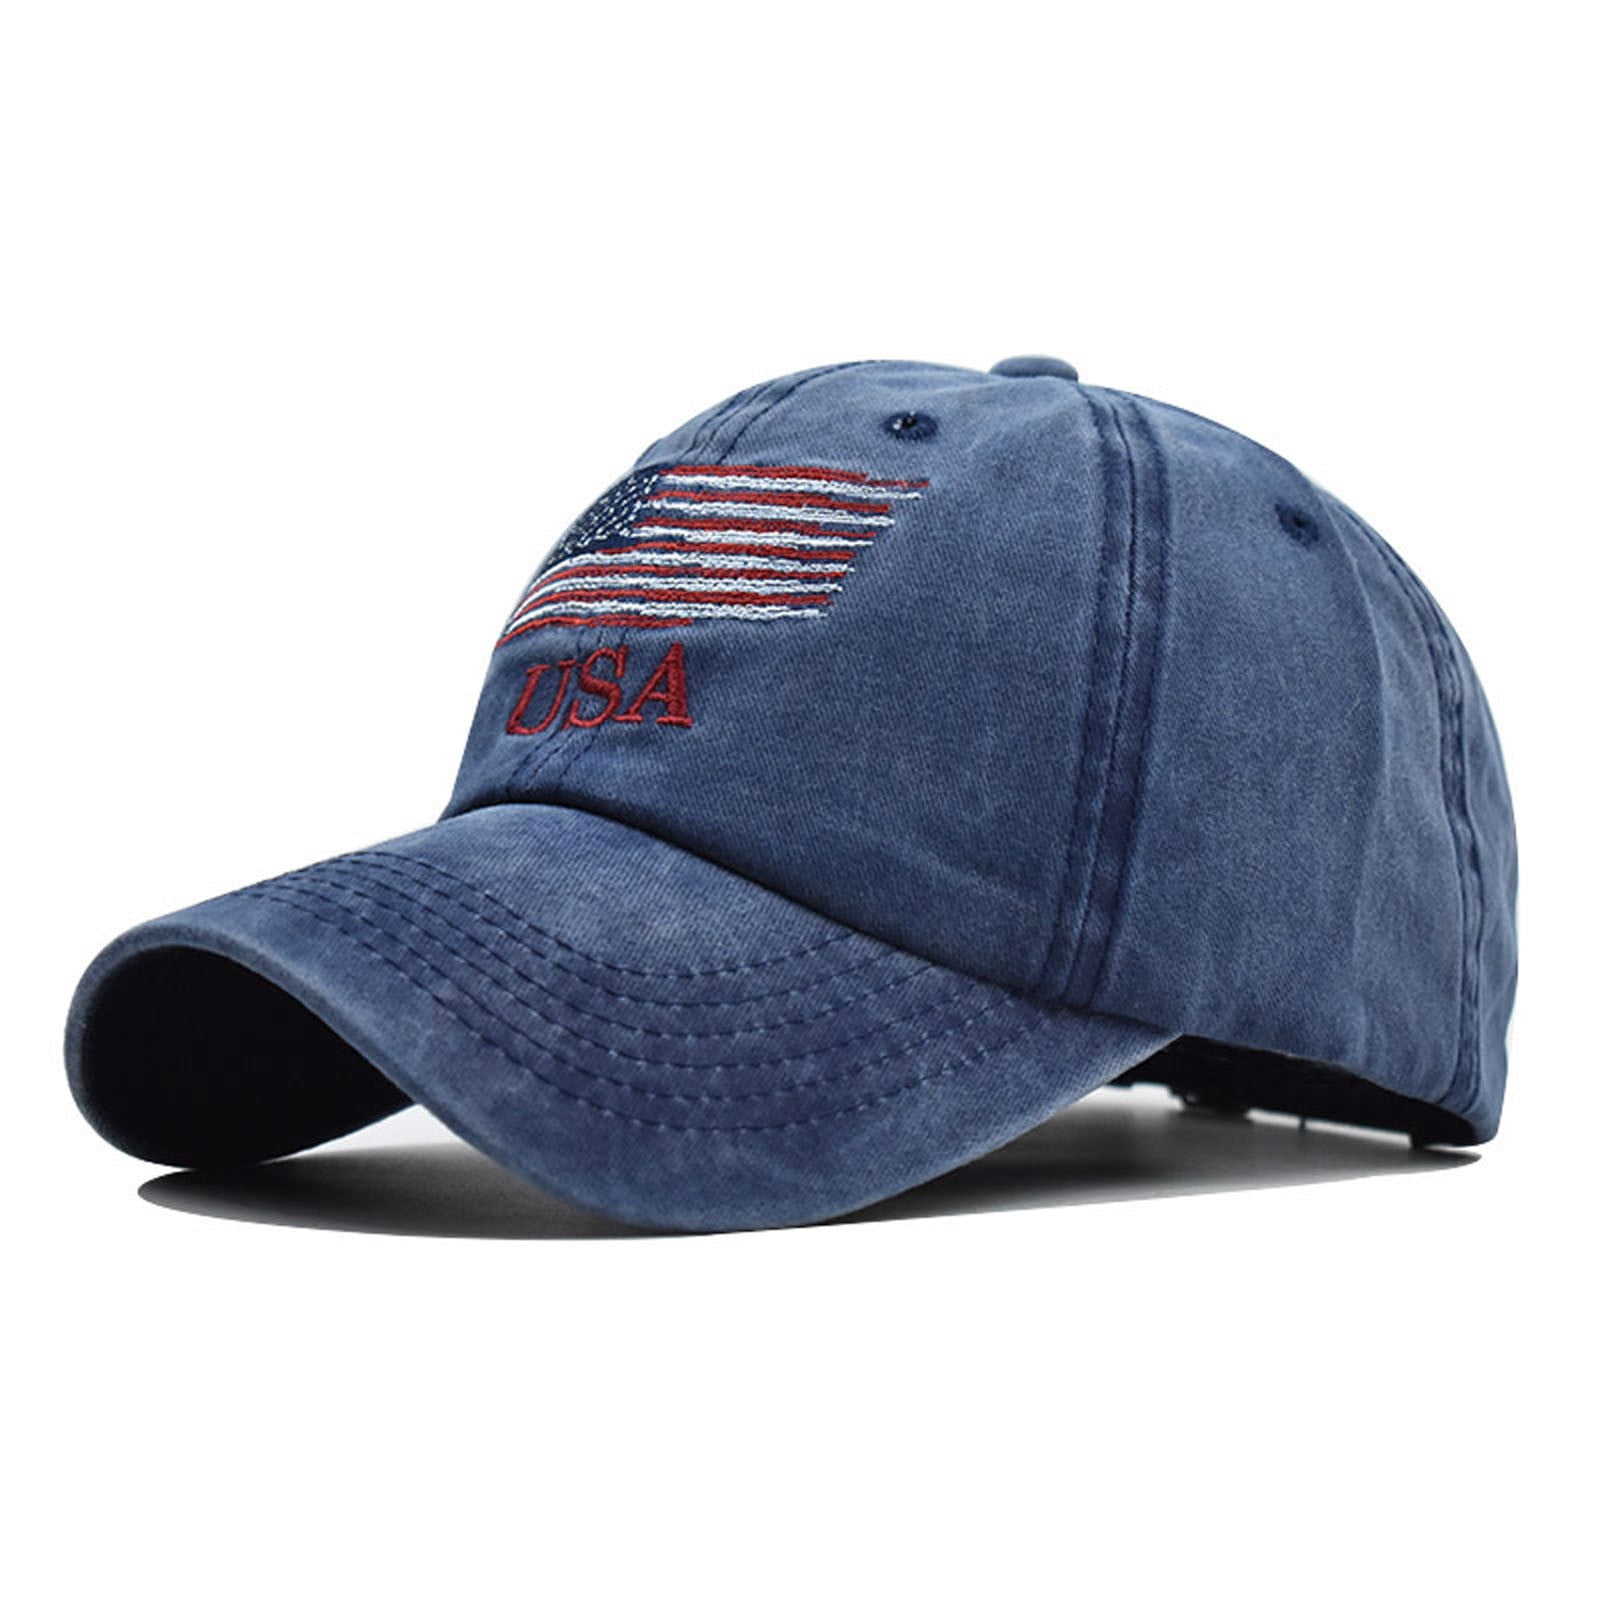 U.S.A FLAG Cotton Denim Washed Adjustable Baseball Cap Hats LOT Buy 3 get 1 free 